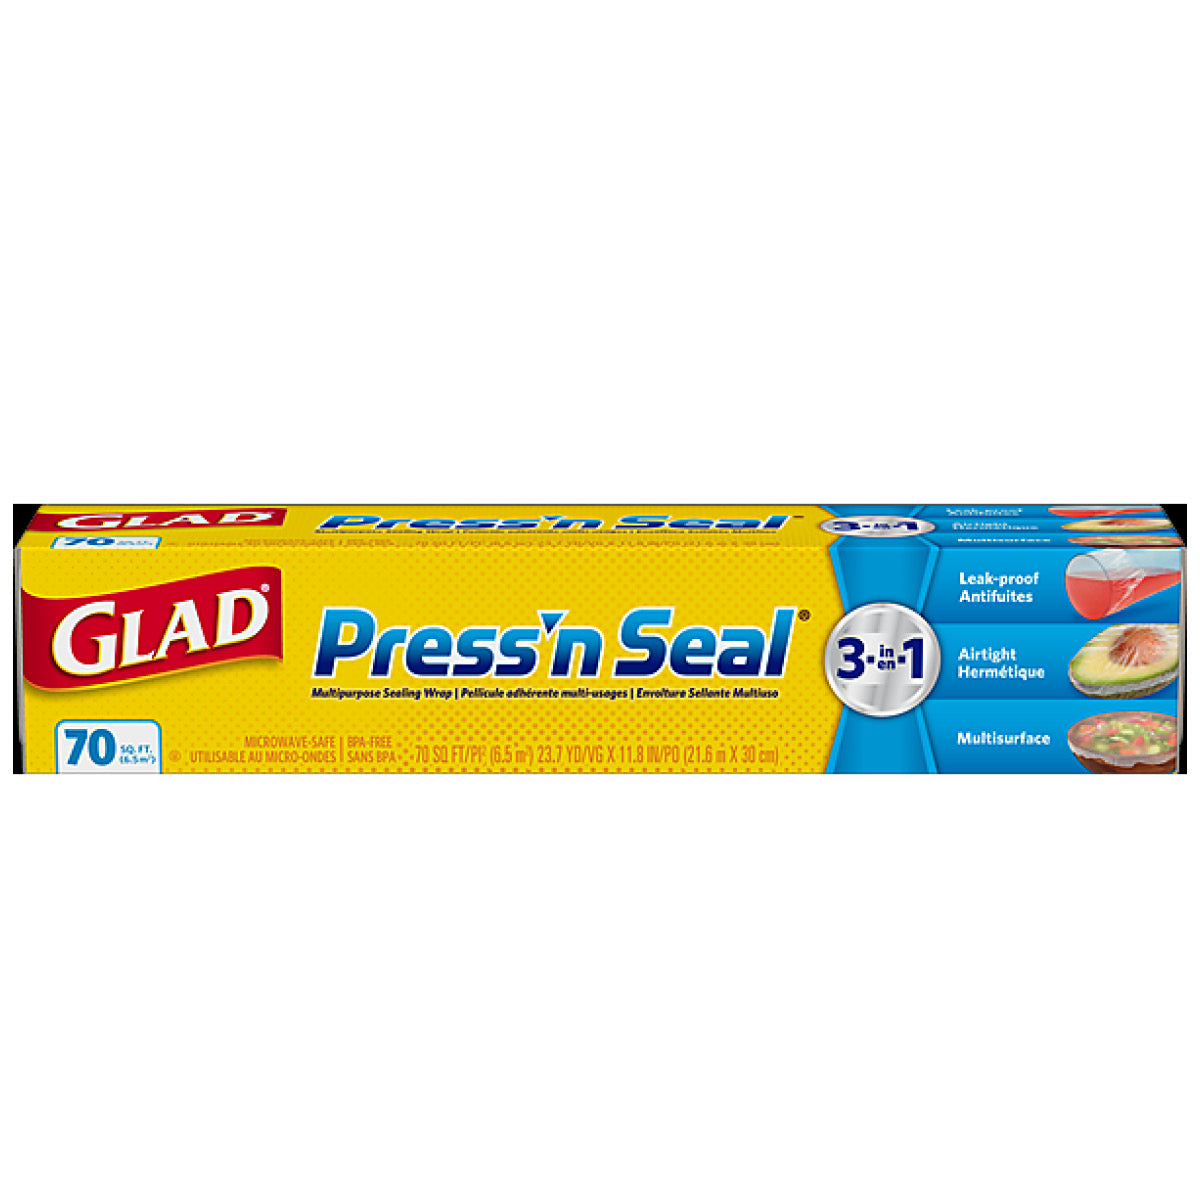 Glad Press 'n Seal Cling Wrap, 70sq ft